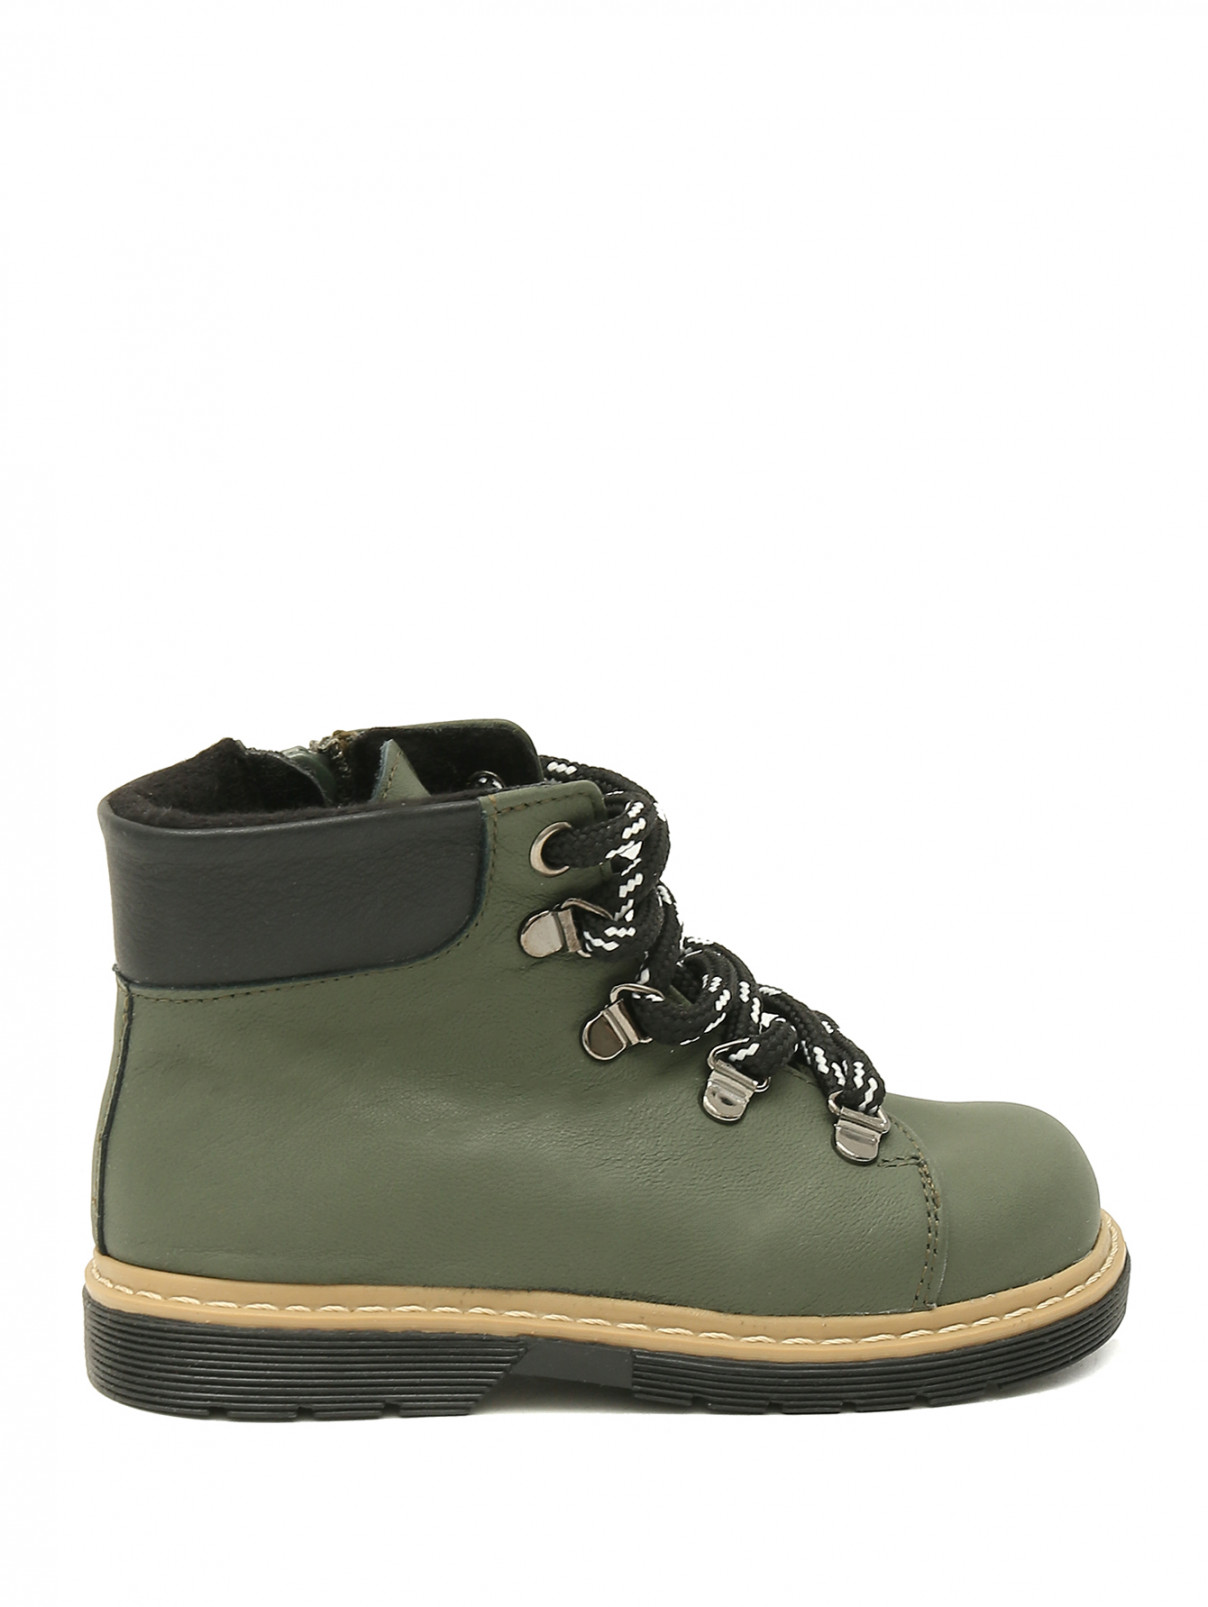 Ботинки из кожи на шнуровке Zecchino d`Oro  –  Обтравка1  – Цвет:  Зеленый